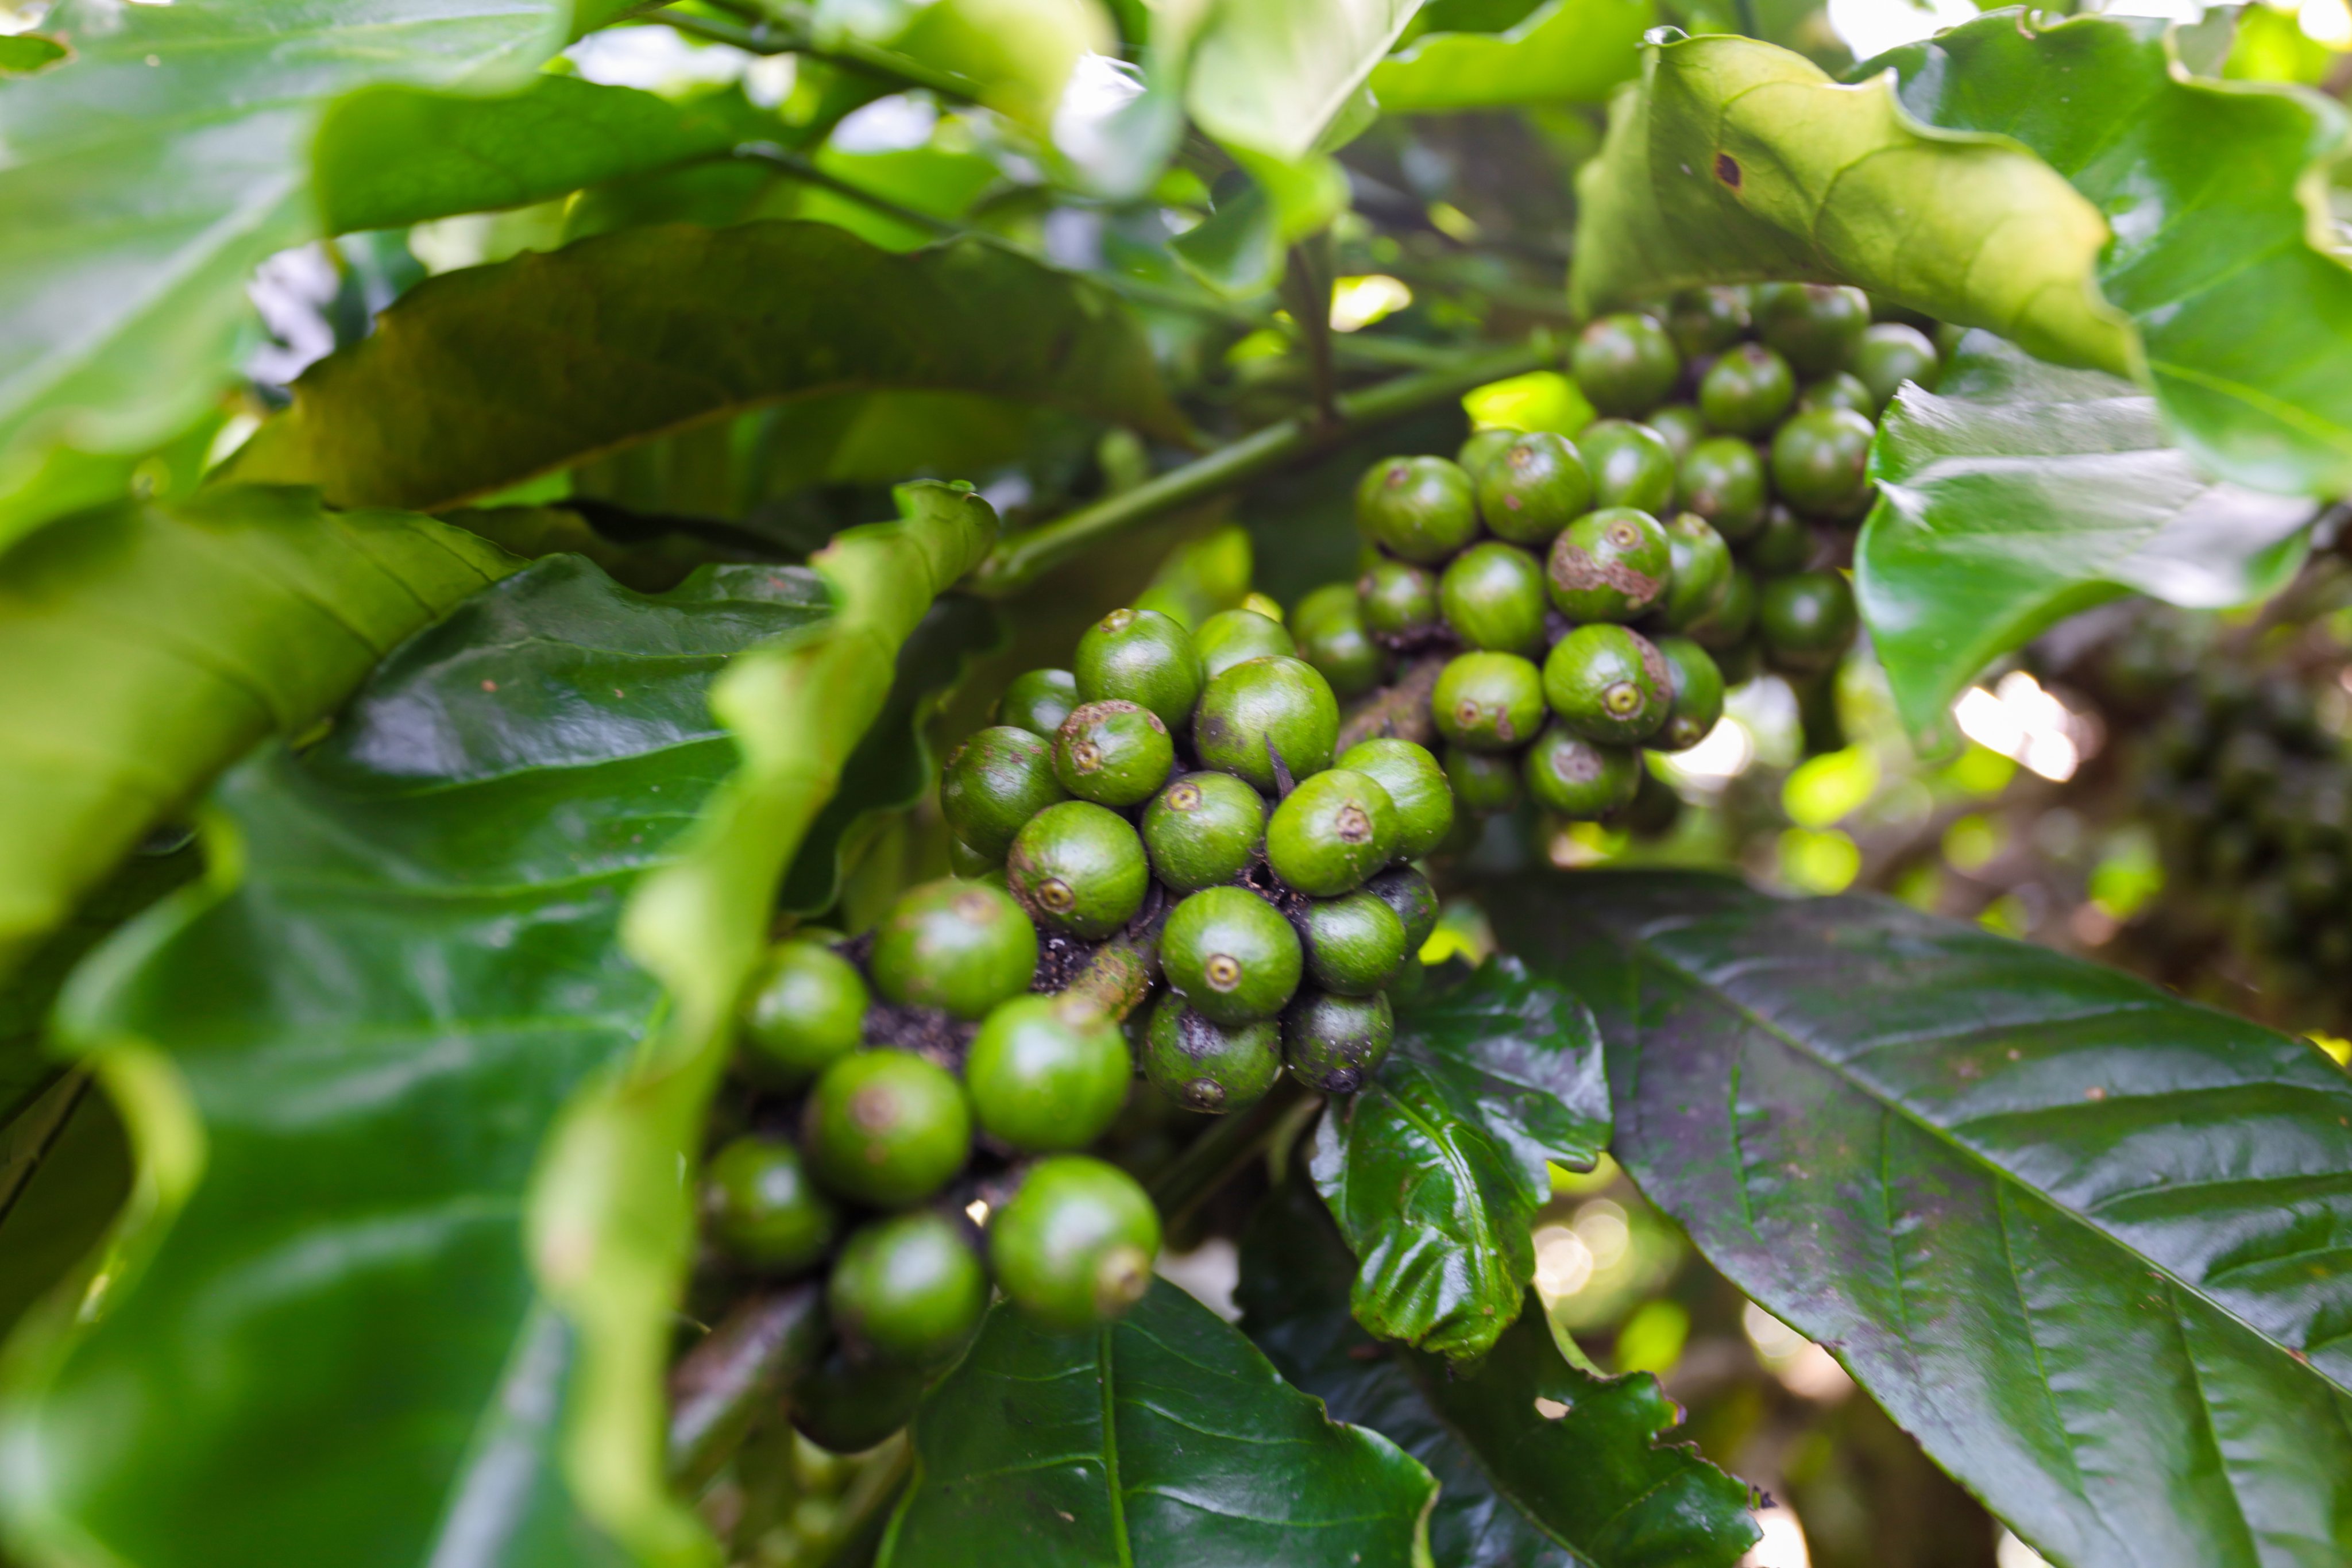 liberica-coffee-origin-biological-characteristics-helena-jsc